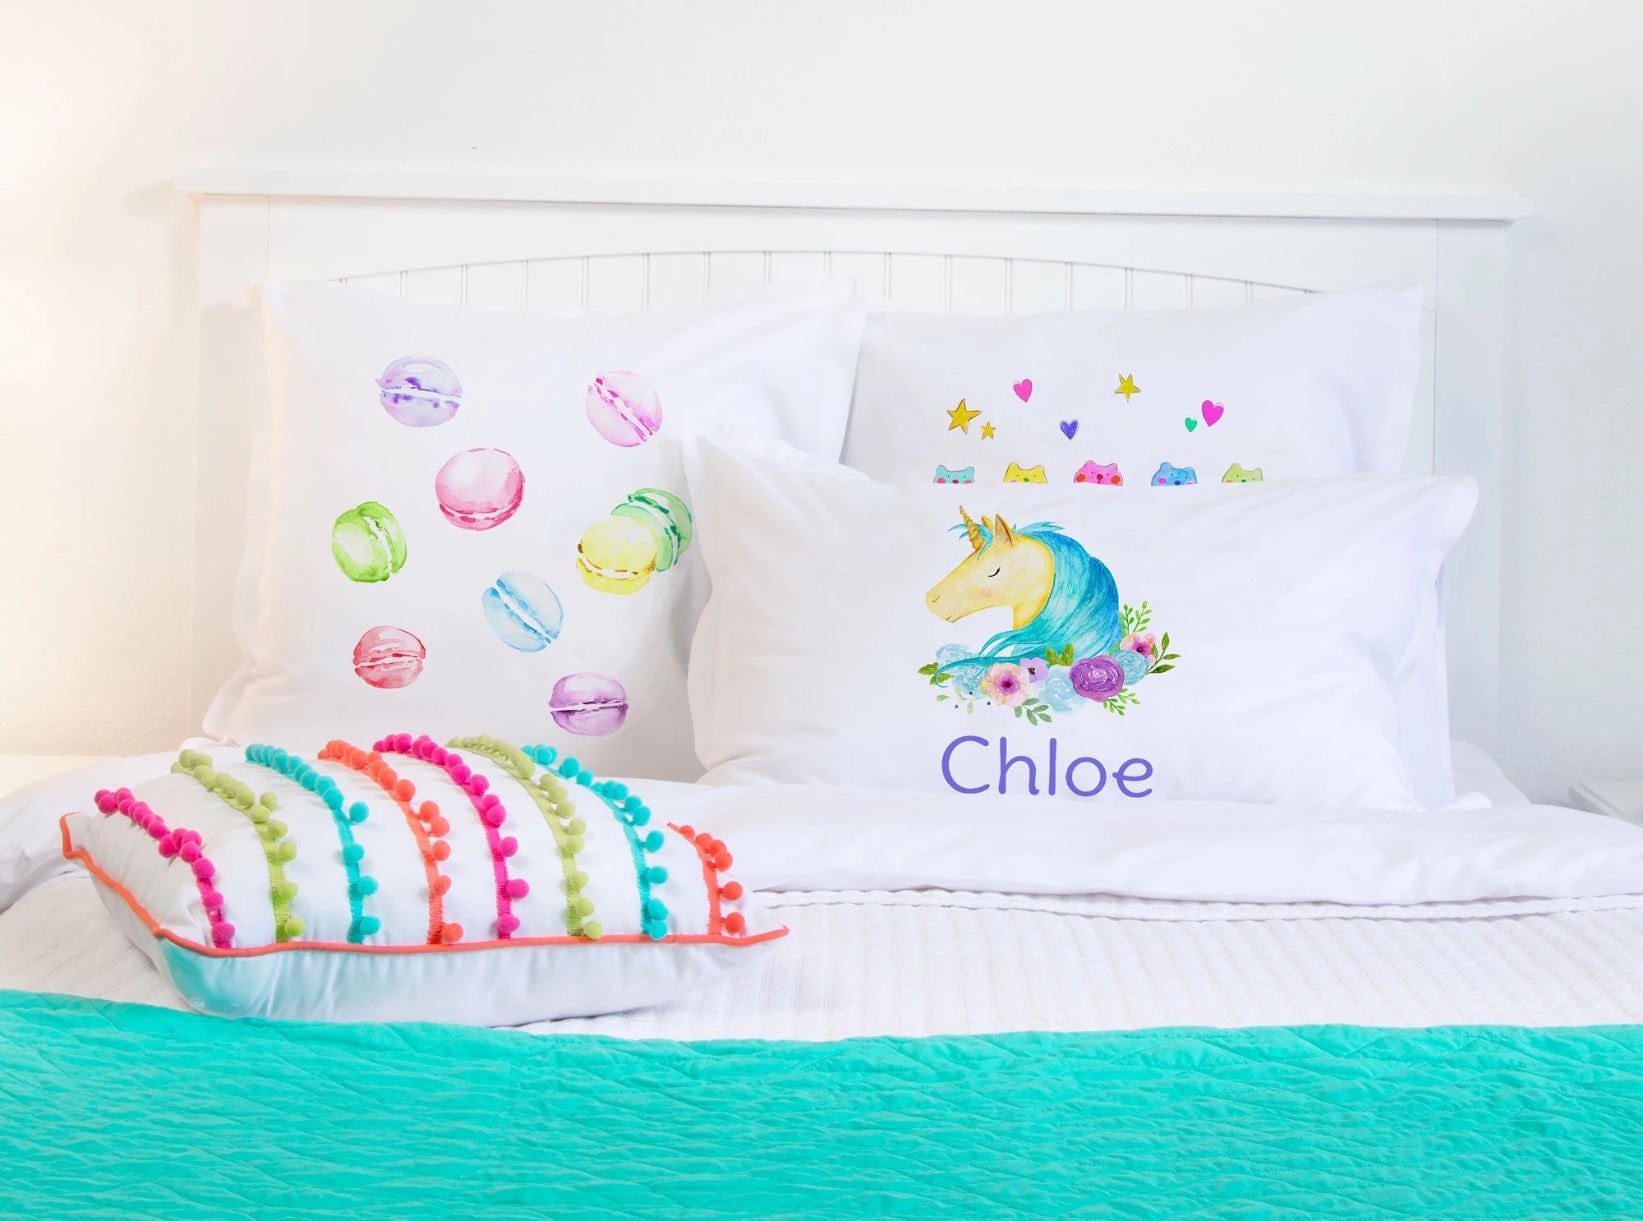 Blue Unicorn - Personalized Kids Pillowcase Collection